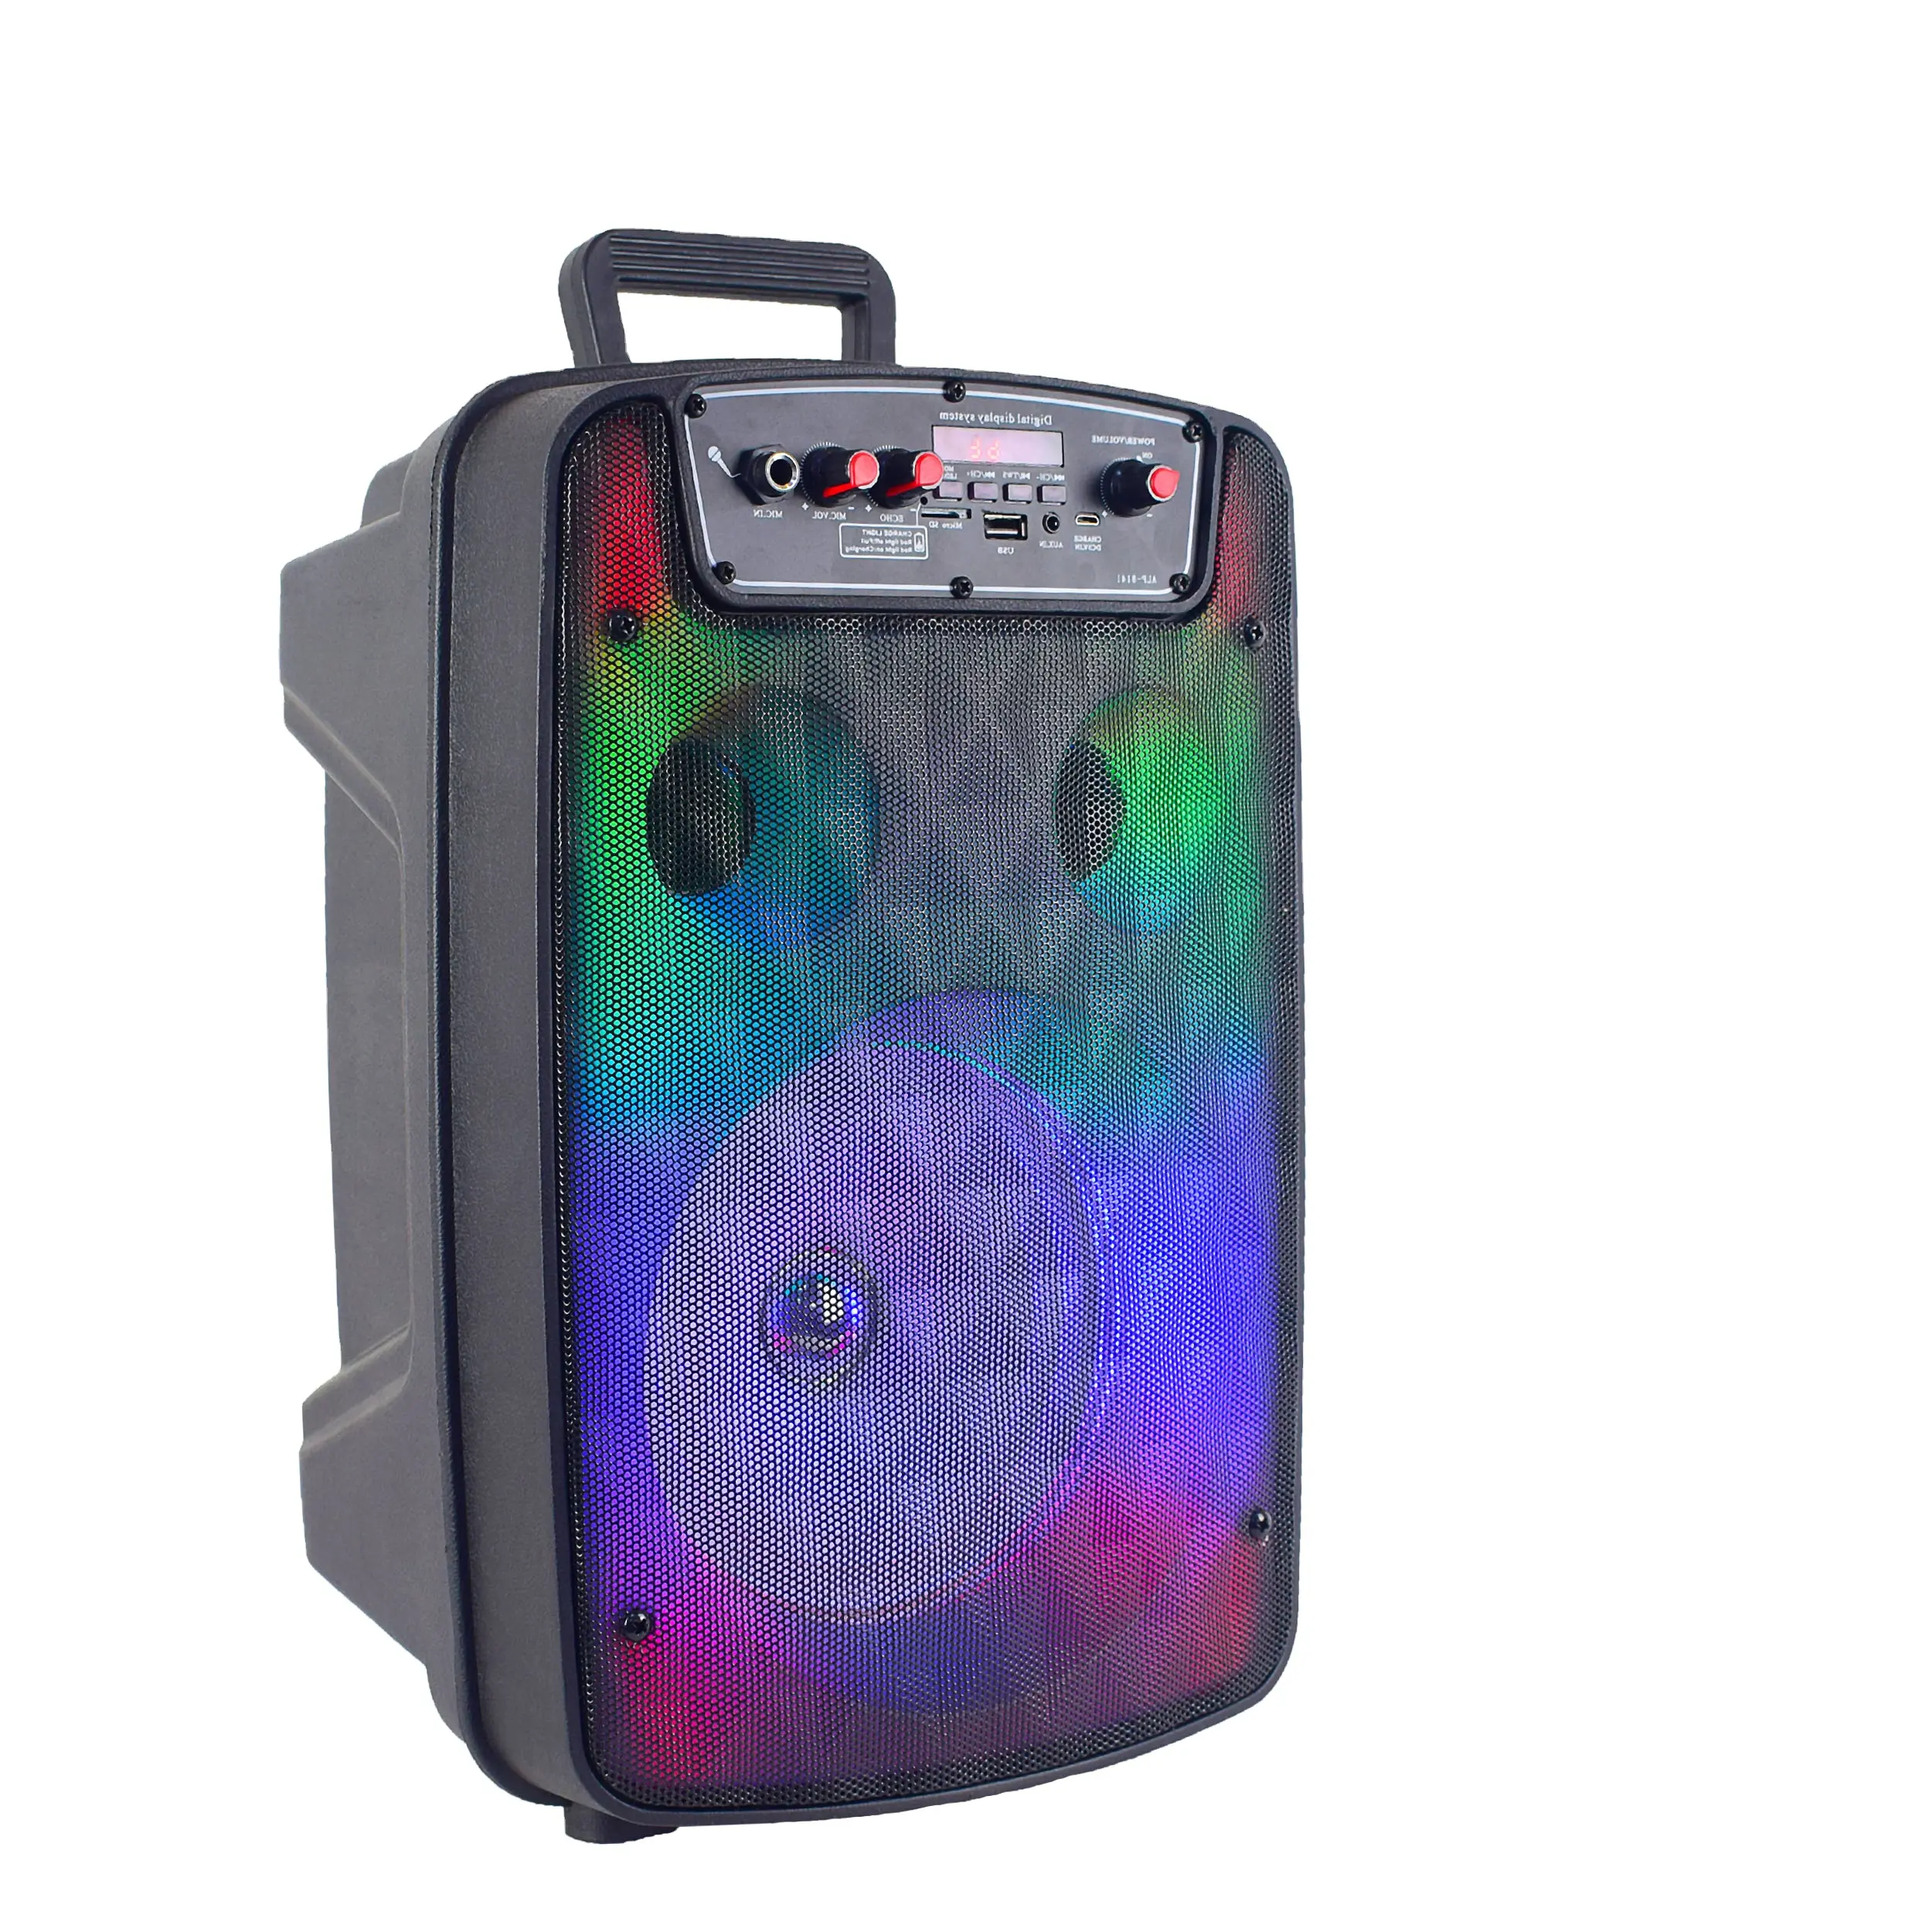 8 inç renkli led hoparlör ses hoparlörü taşınabilir hoparlör